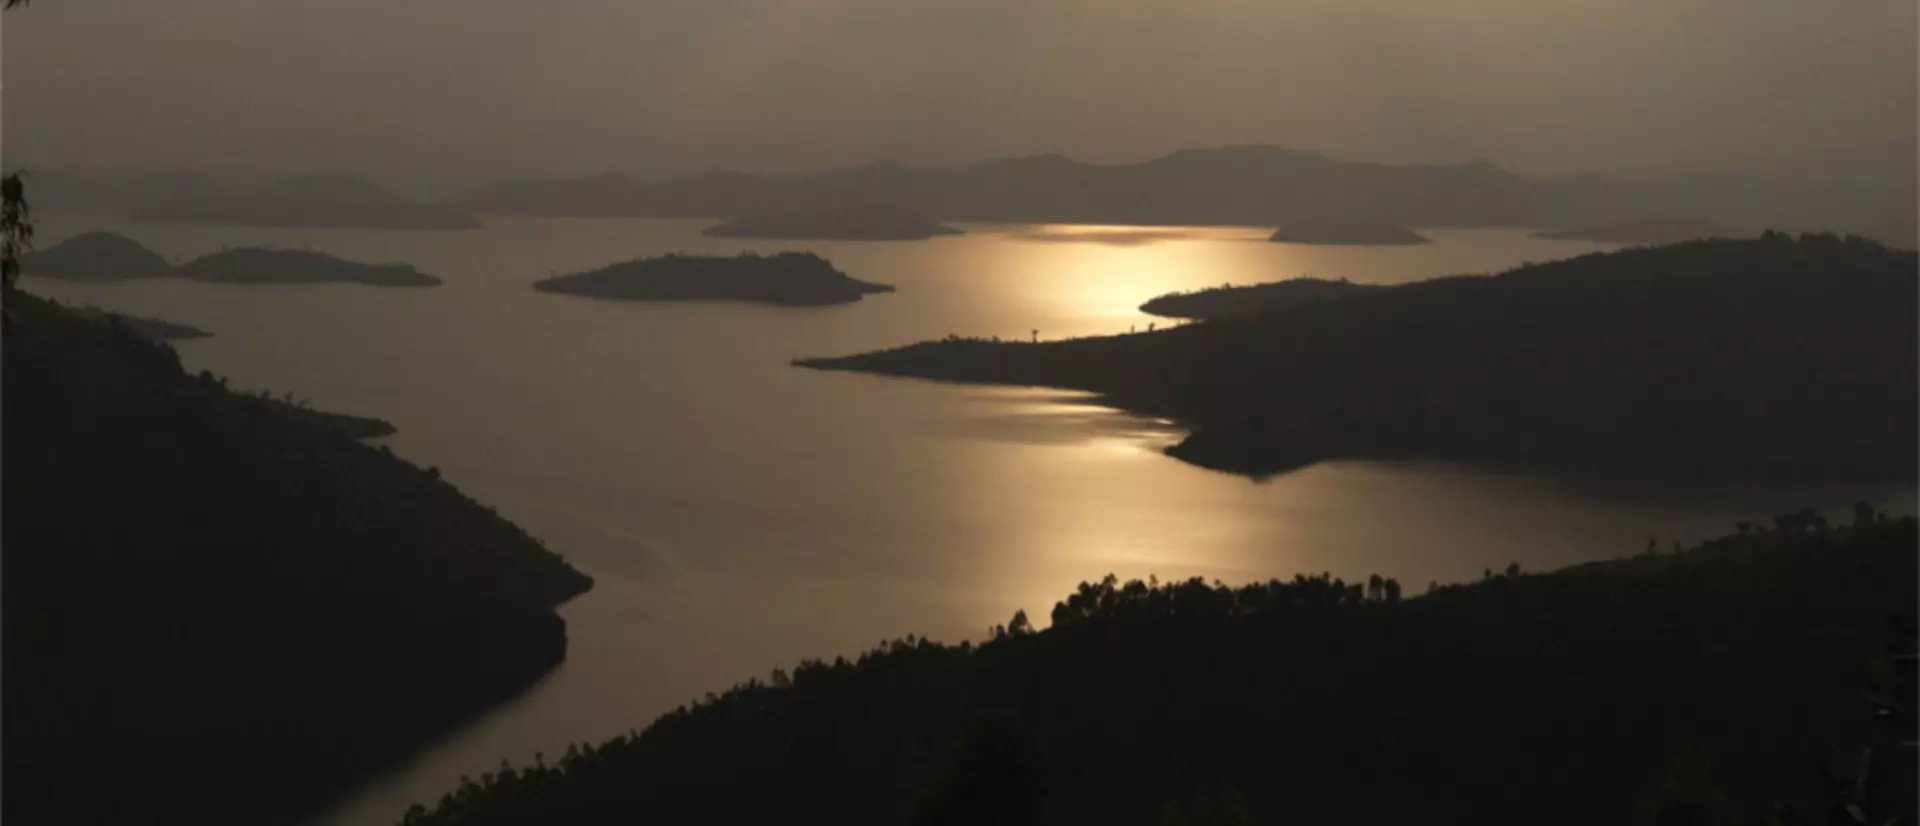 Ruanda Reise lake kivu bei sonnenuntergang